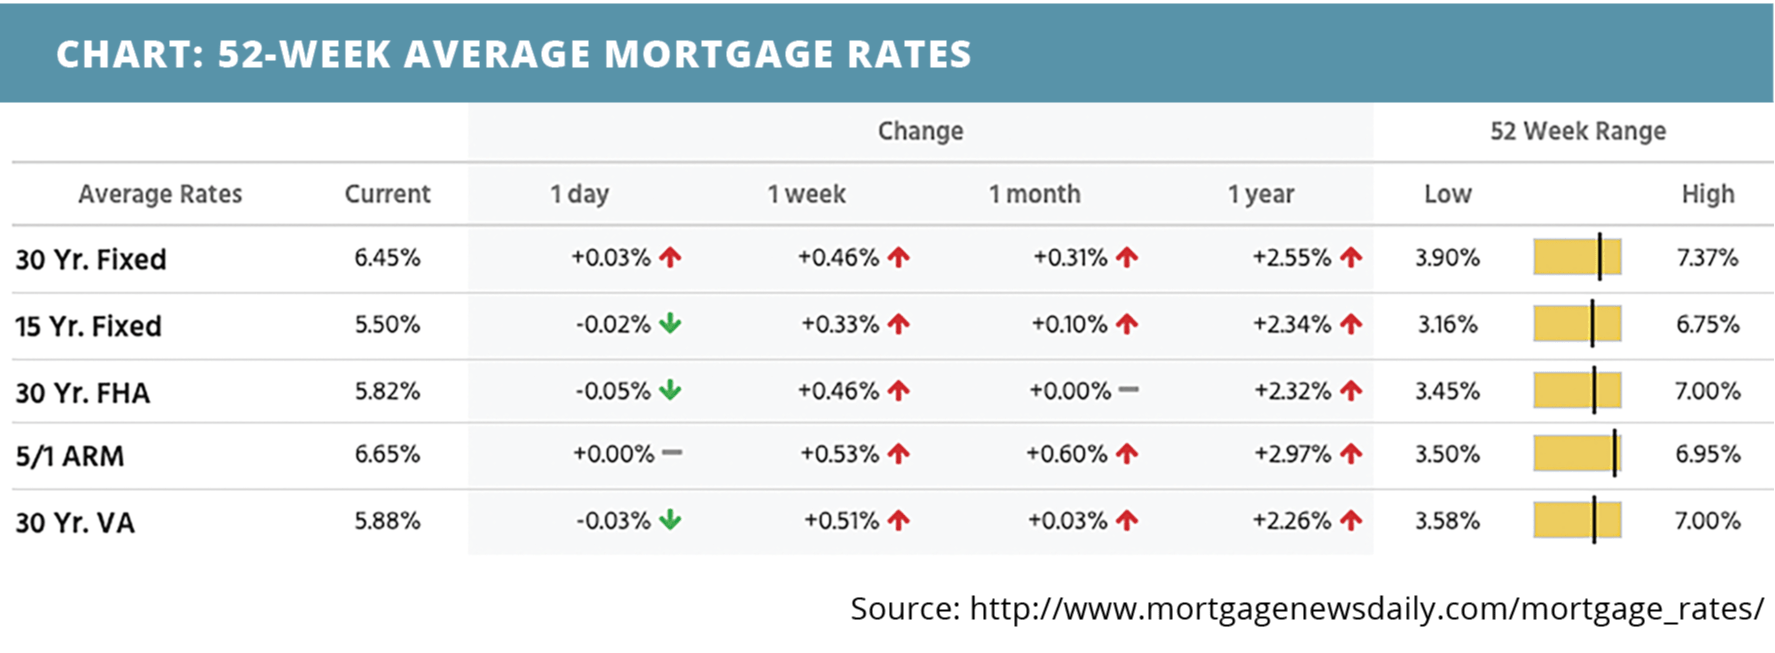 52-week-average-mortgage-rates-for-february-13-2022